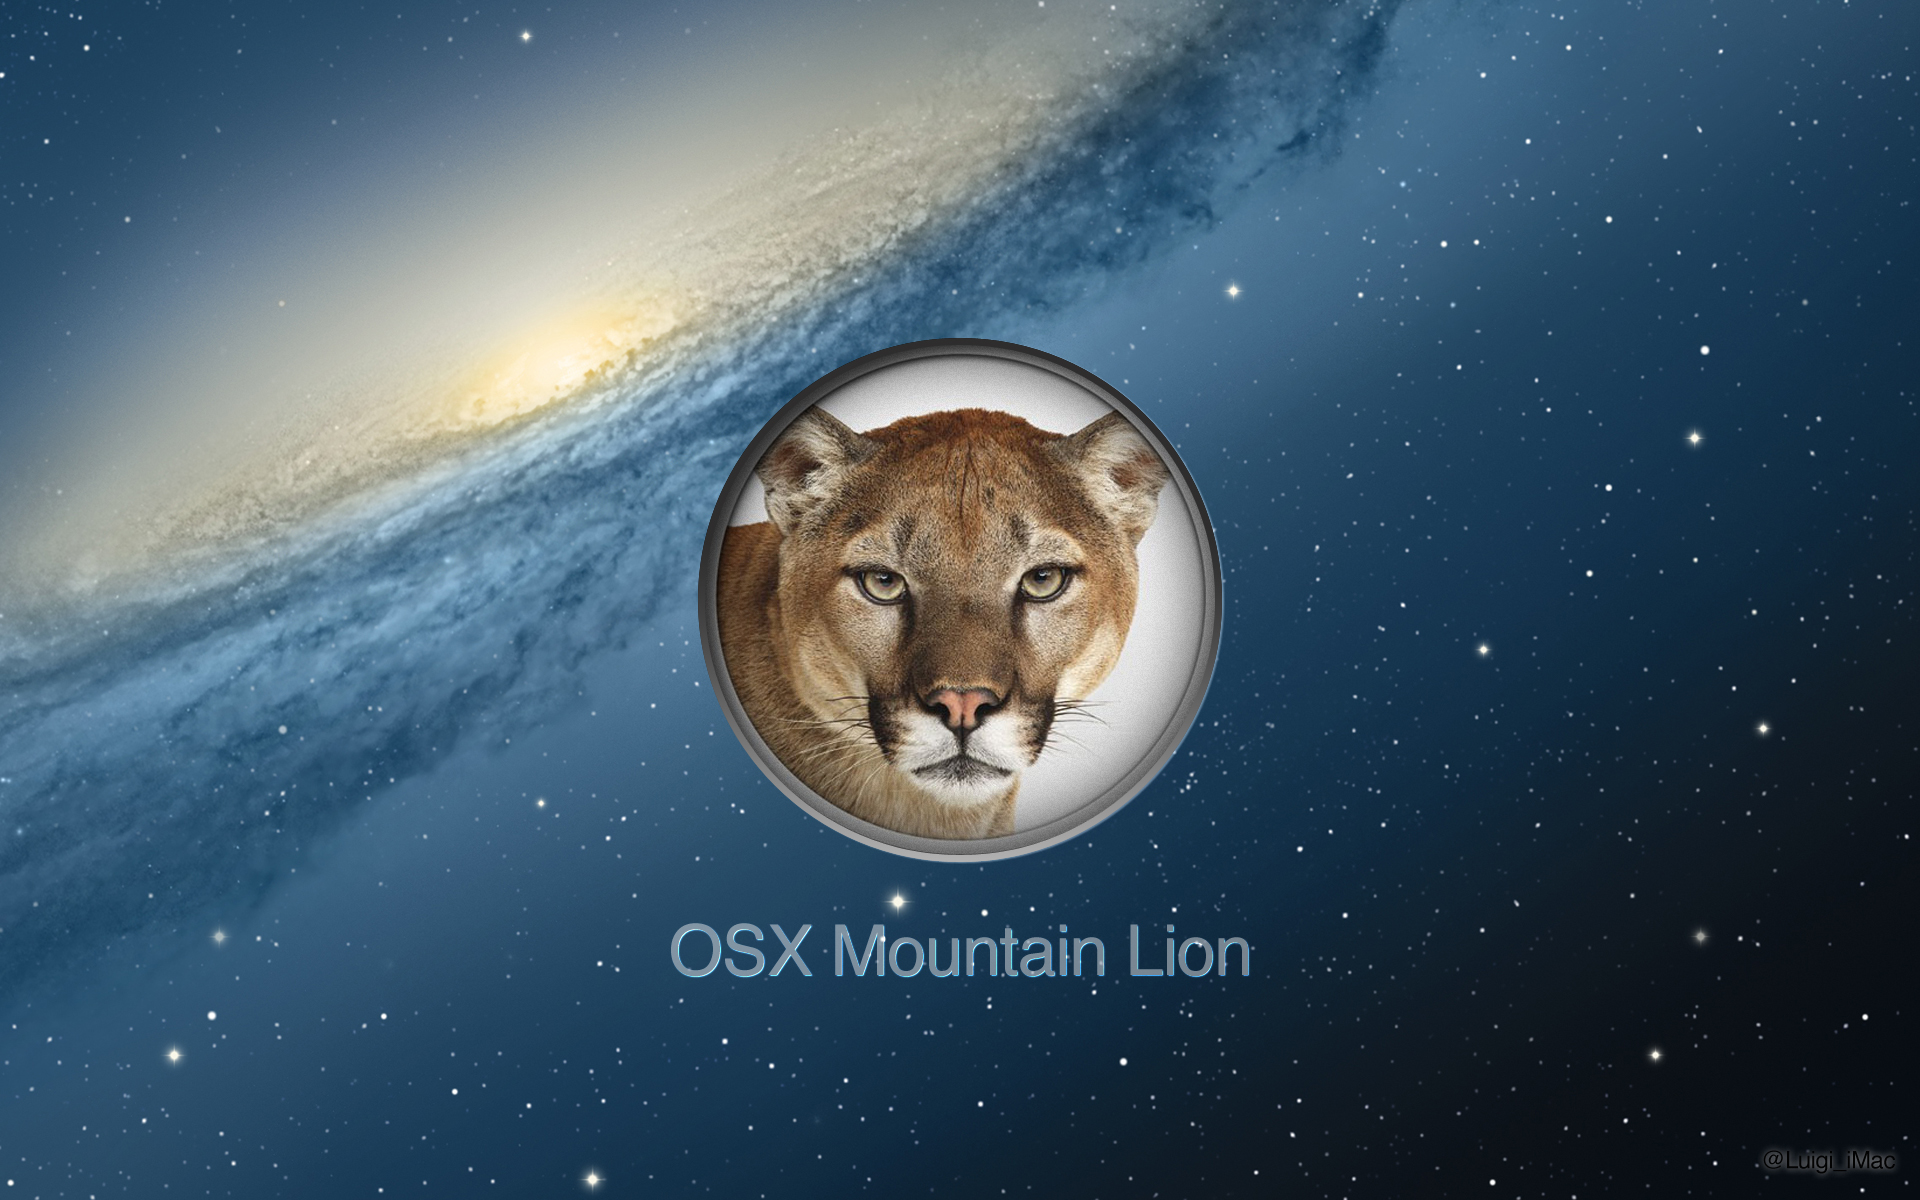 osx_mountain_lion___1920_x_1200_by_luigi_imac-d4q0pbs.jpg